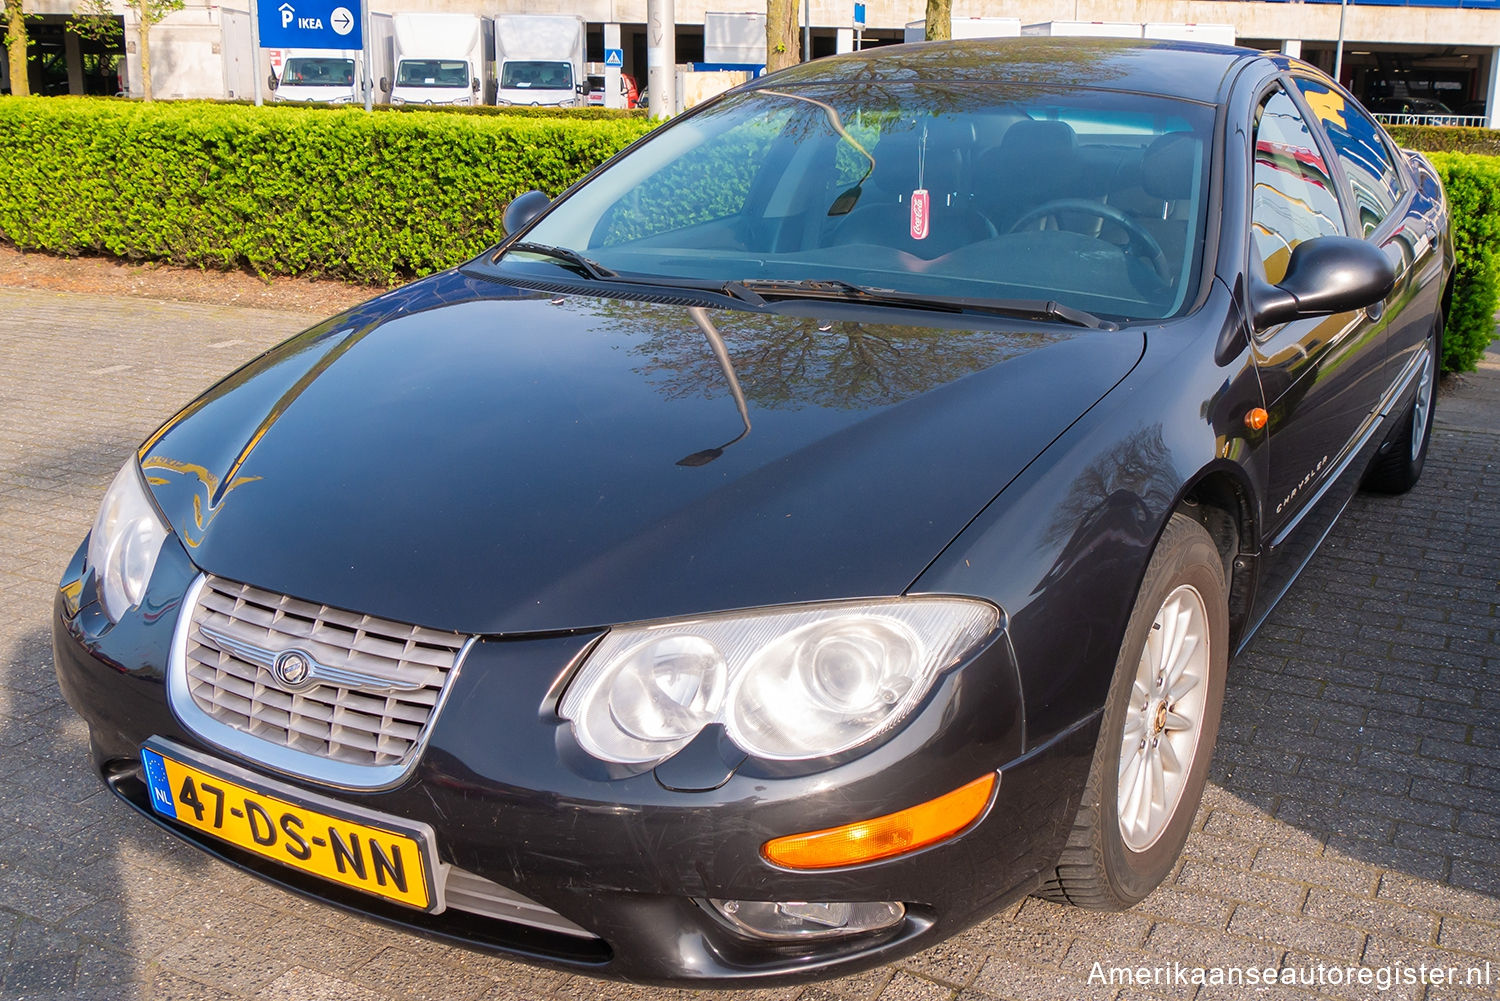 Chrysler 300M uit 1998